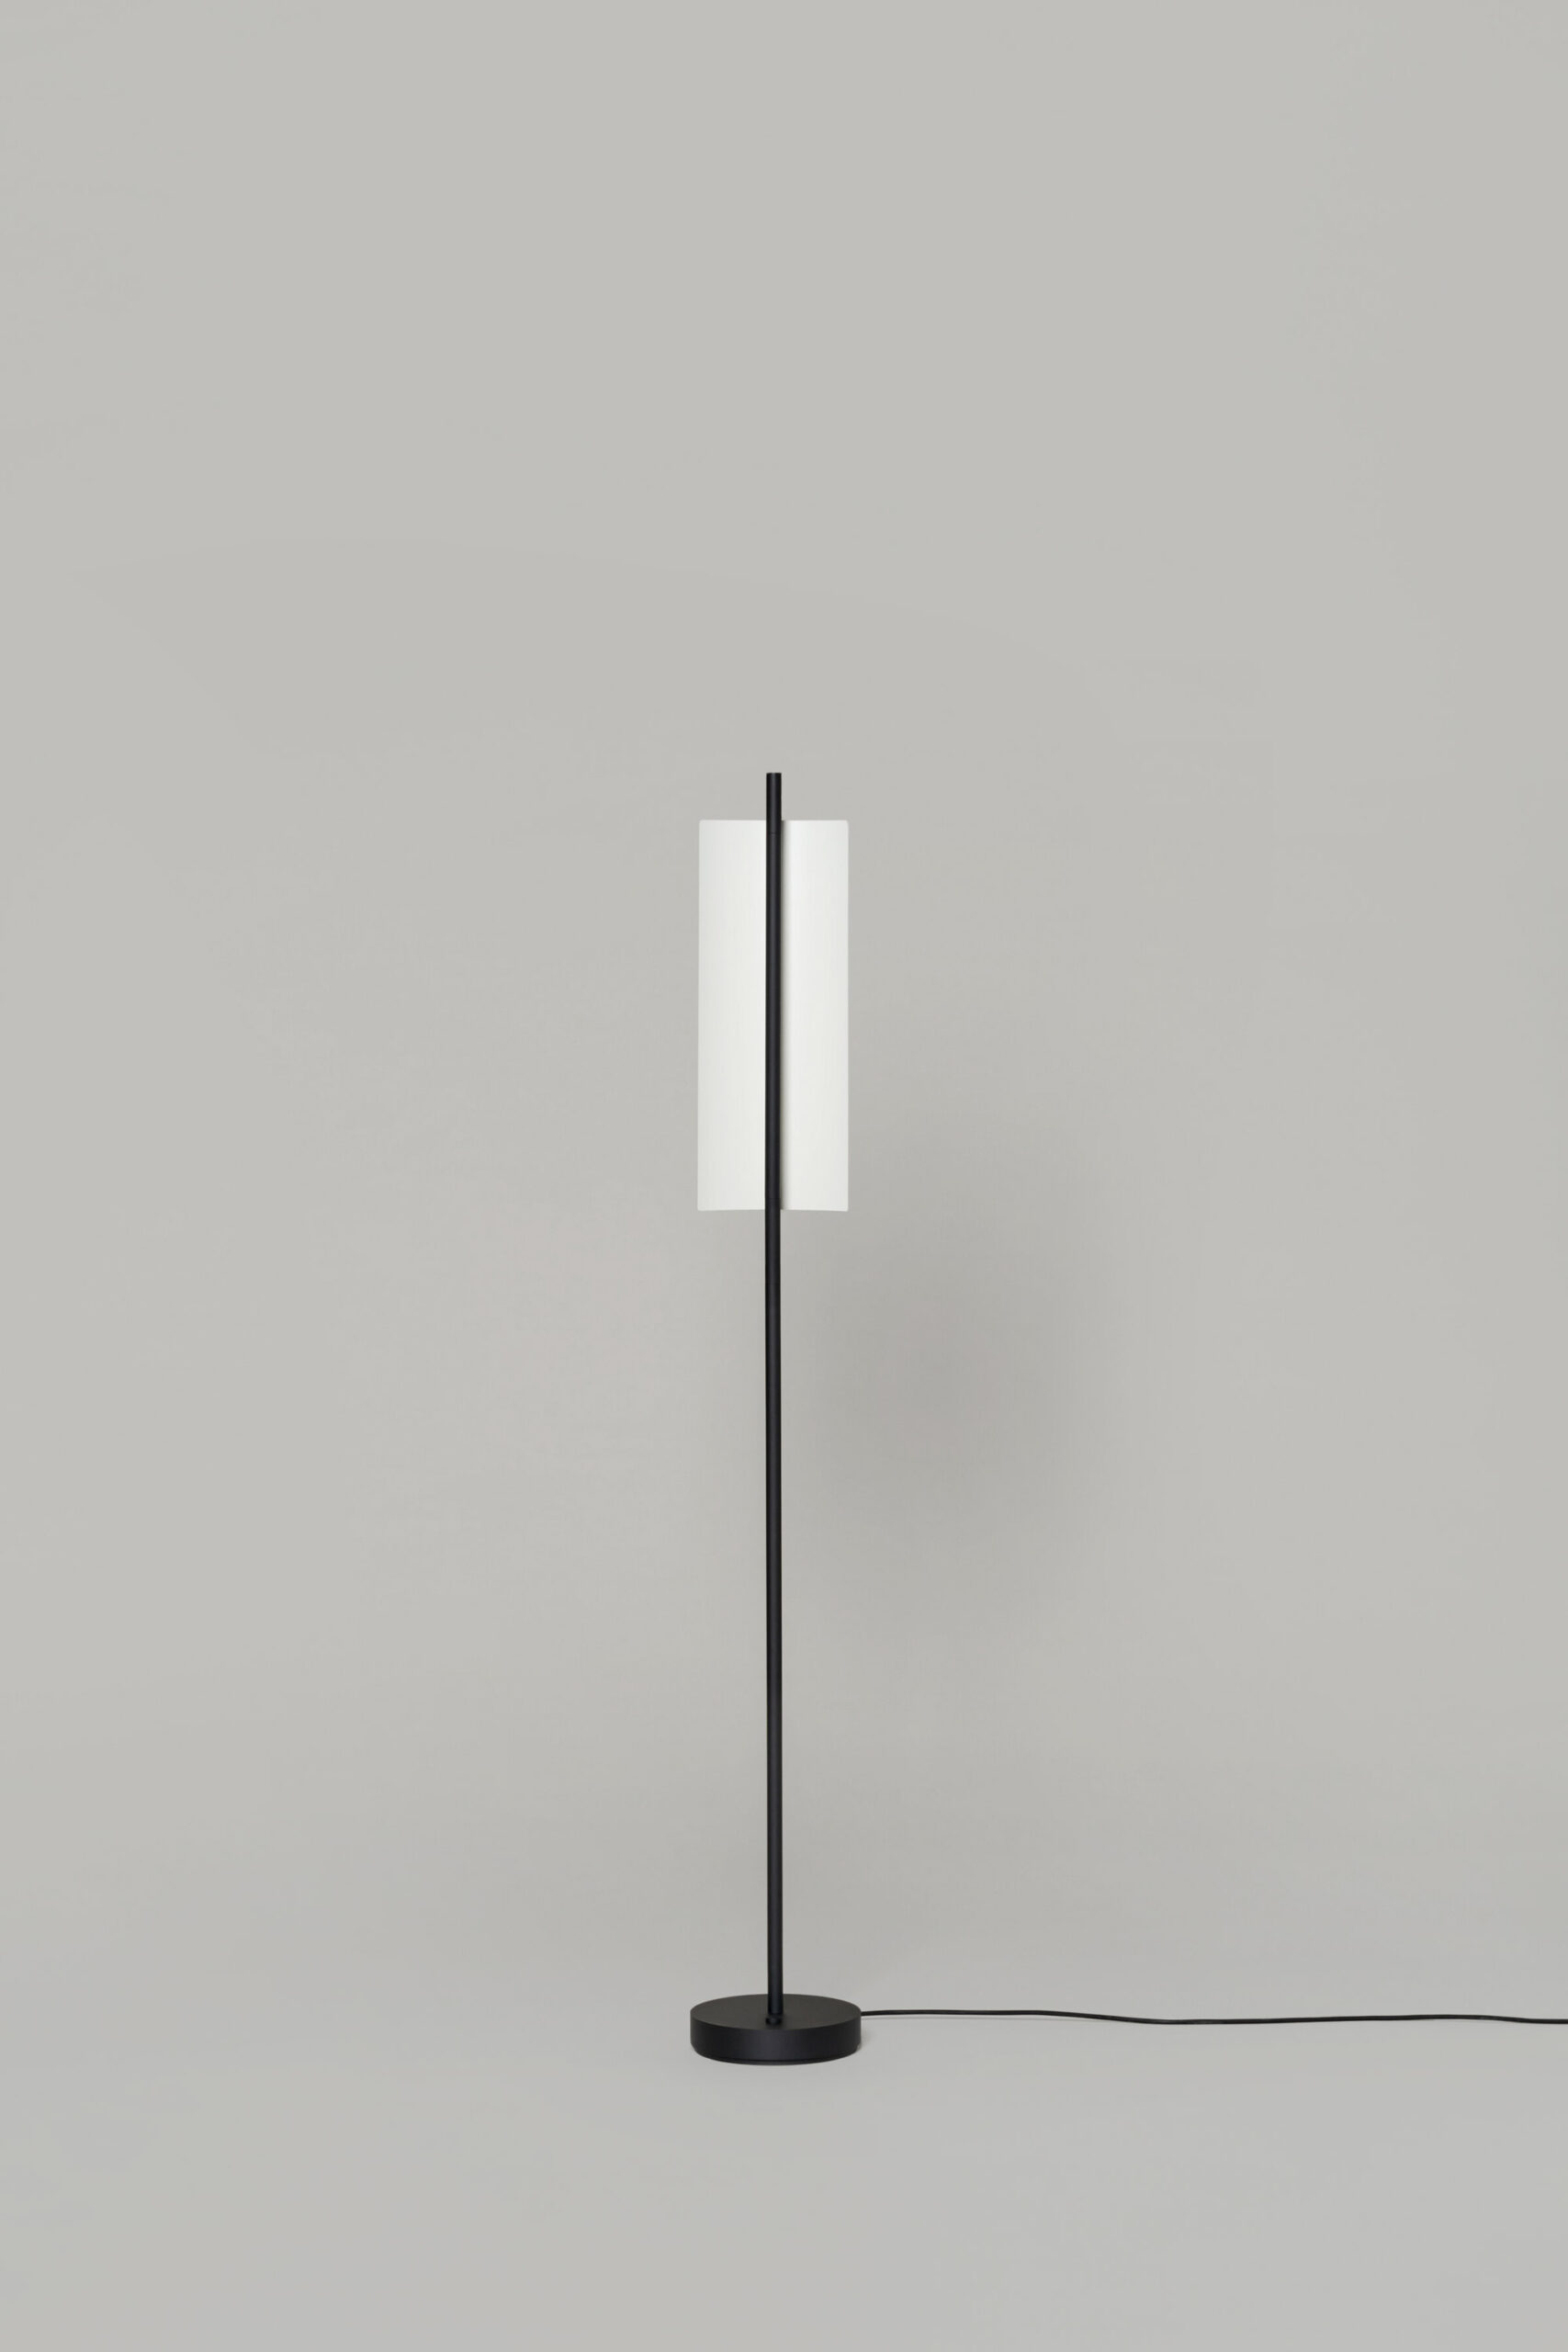 Lámina 45 floor lamp, 2023, Photography by Enric Badrinas for Santa & Cole